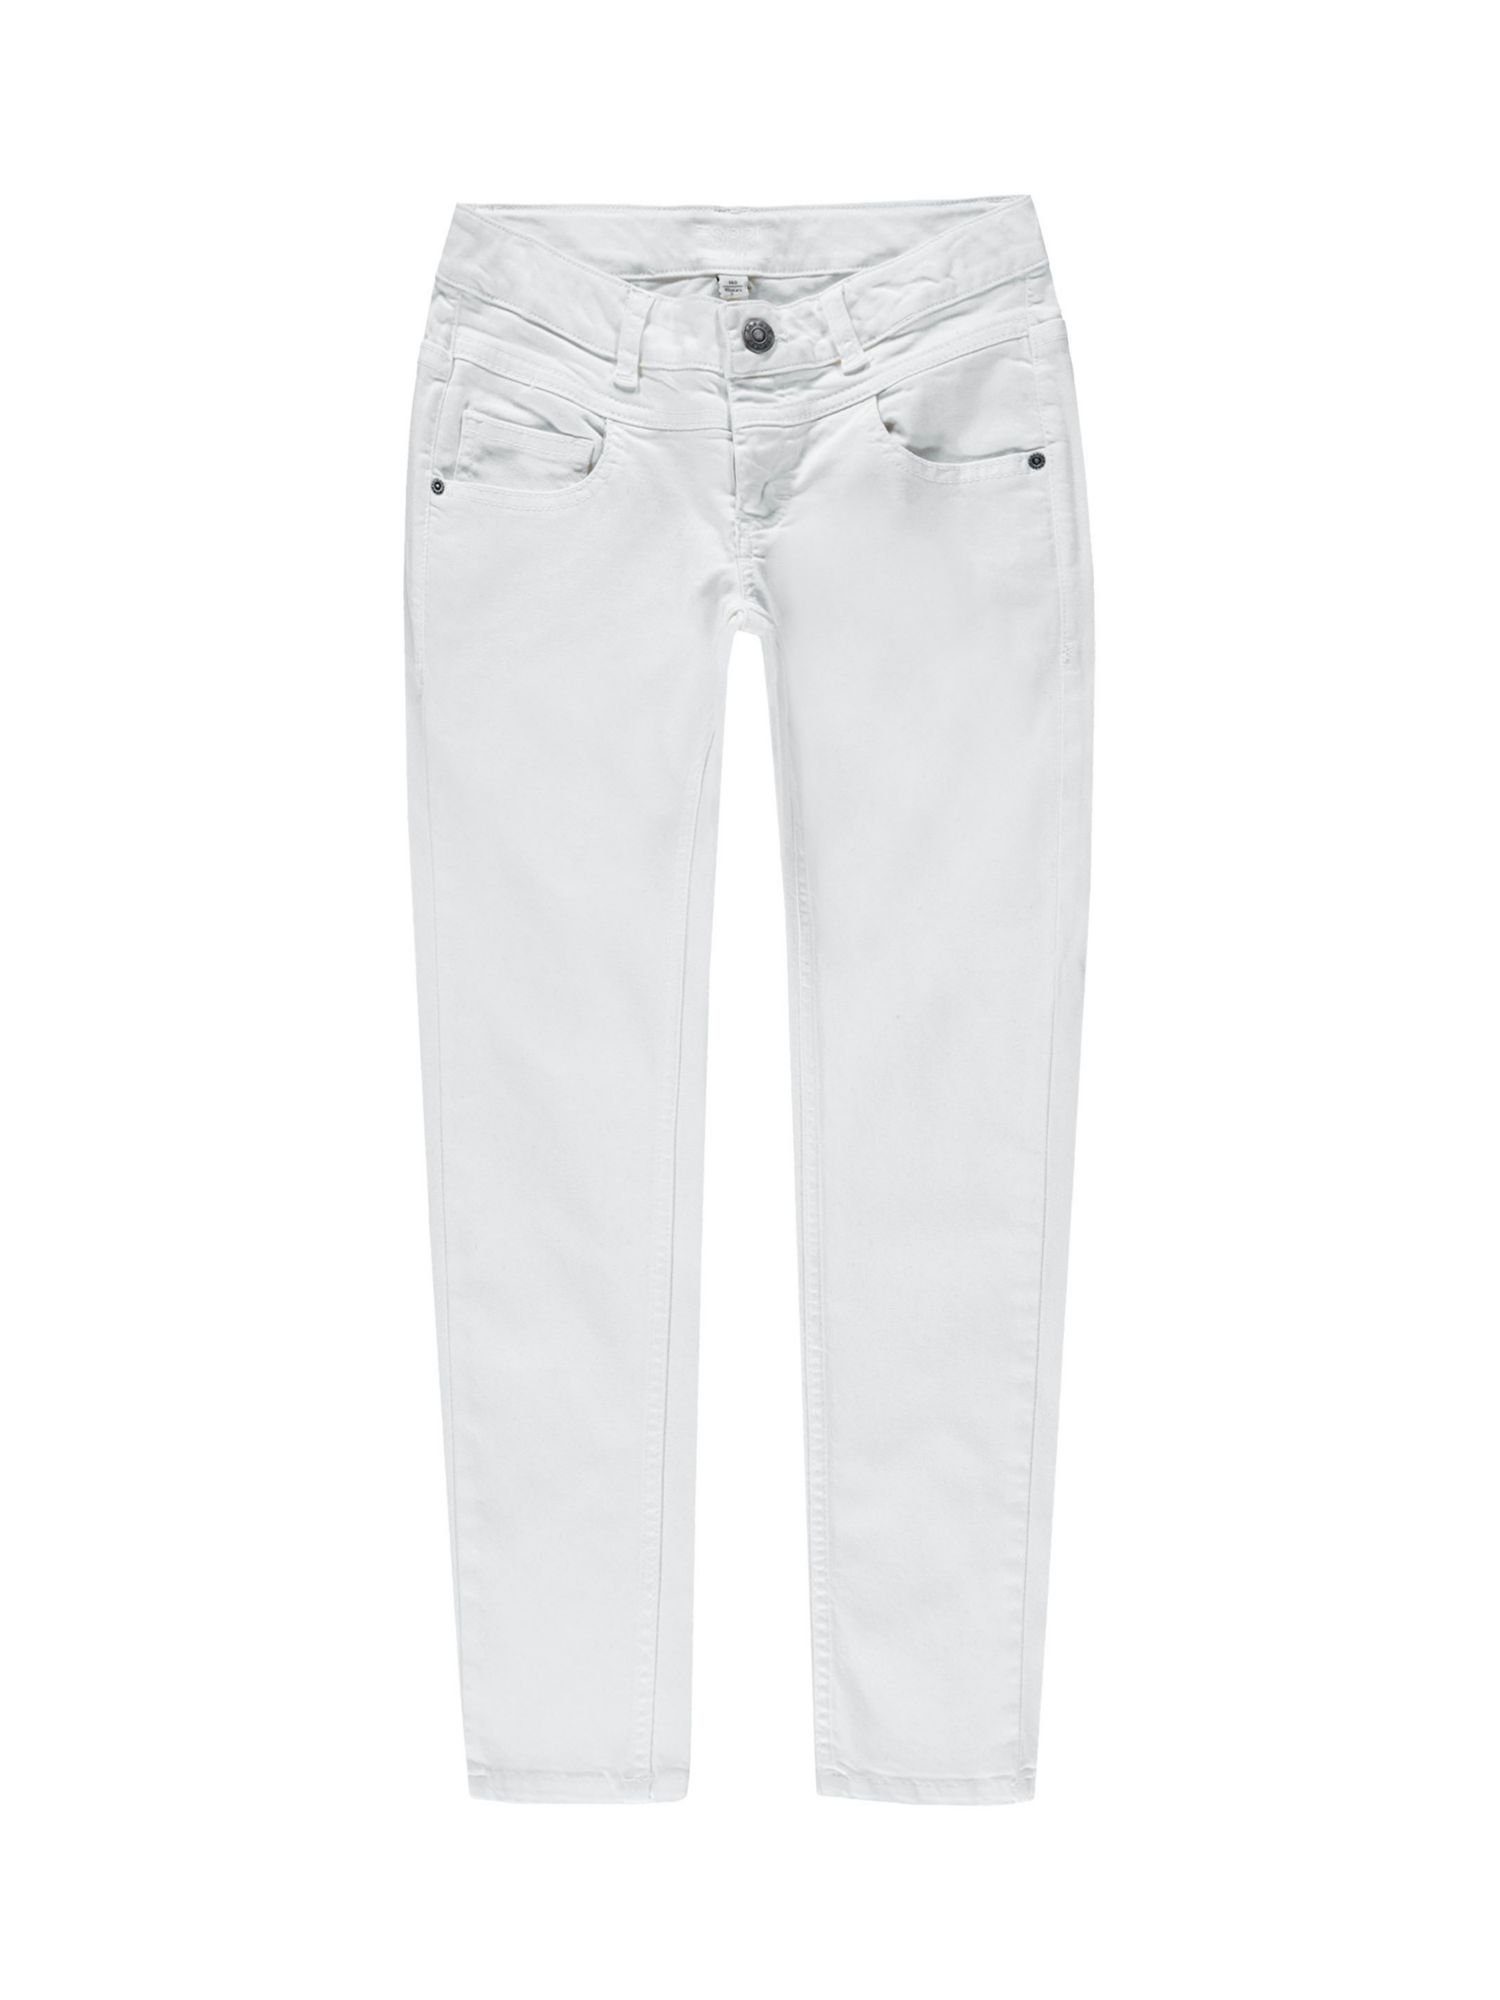 Esprit Stretch-Jeans Pants denim WHITE | Stretchjeans